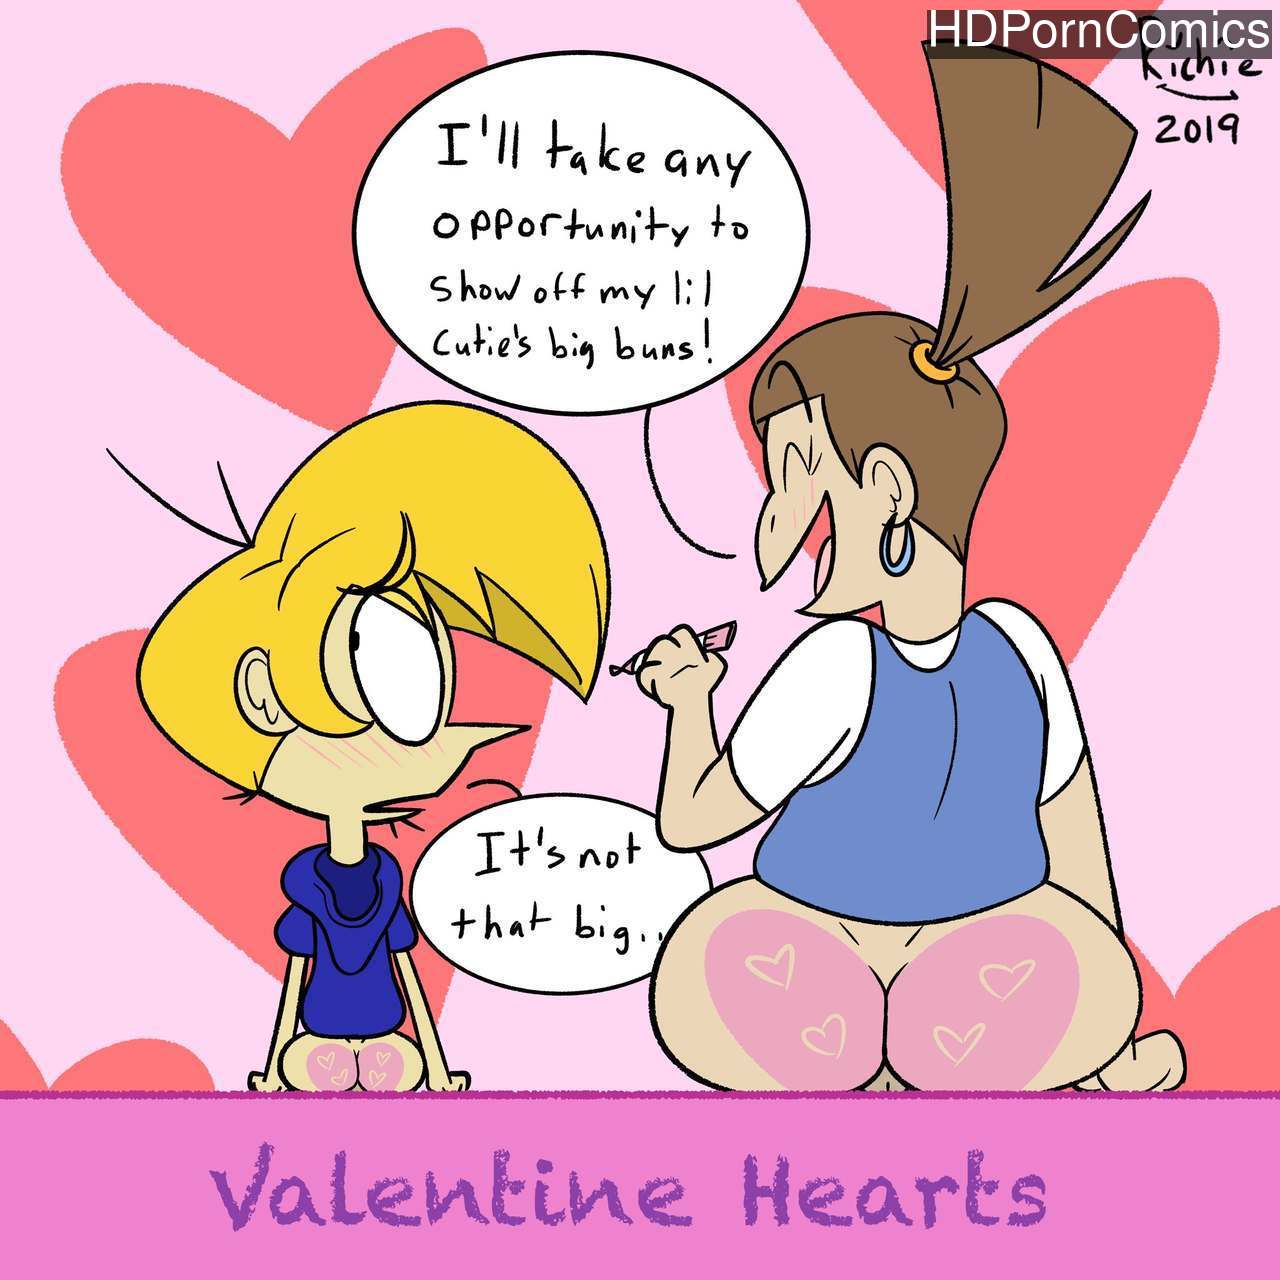 Happy valentines day porn